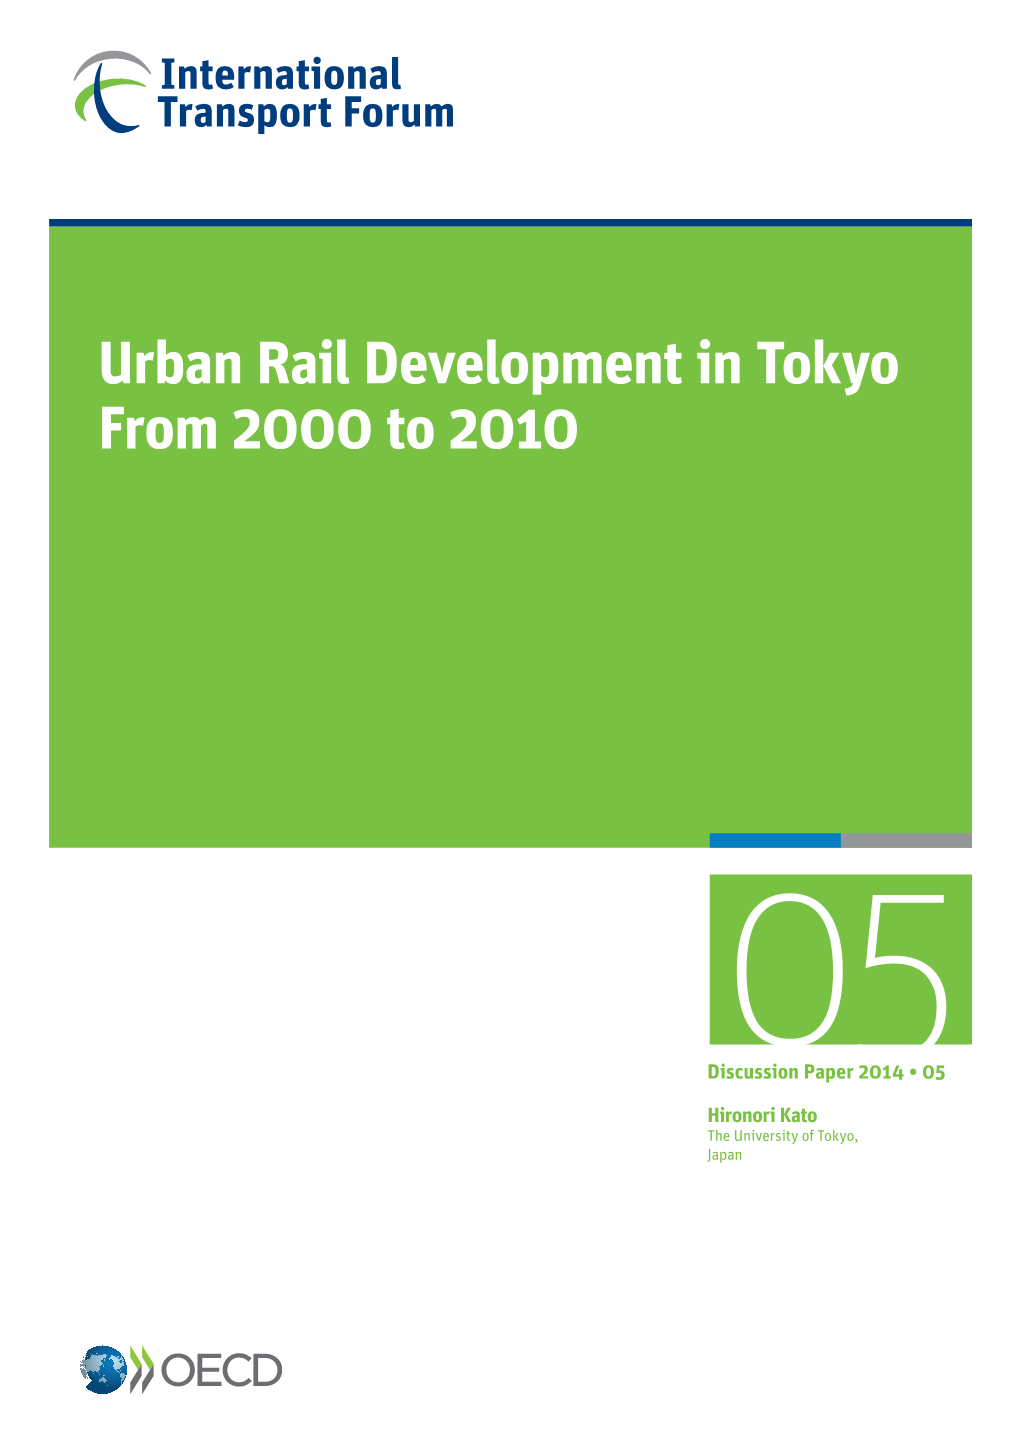 Urban Rail Development in Tokyo from 2000 to 2010